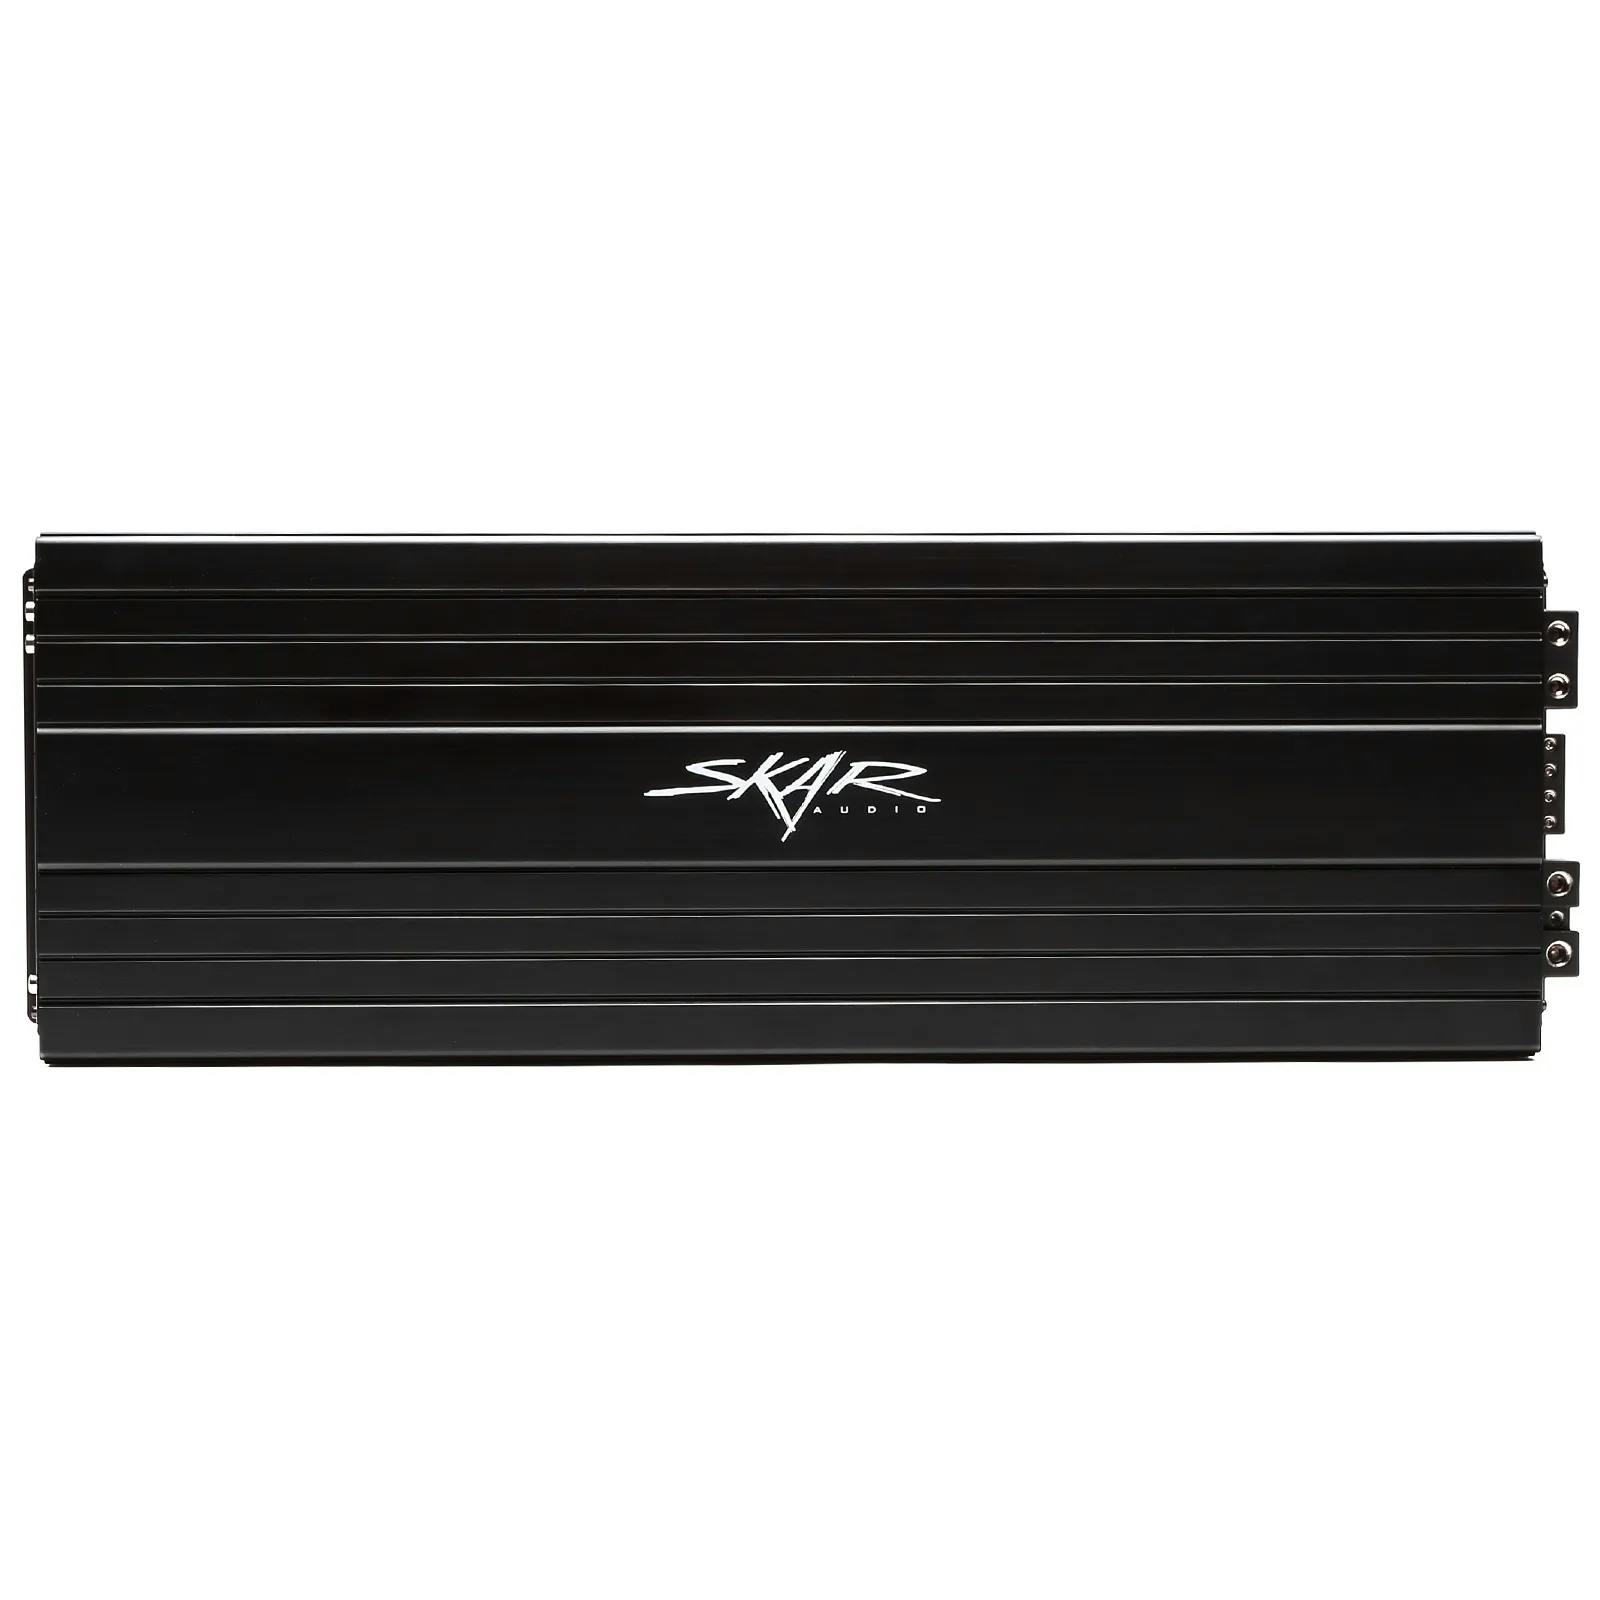 Featured Product Photo for SKv2-4500.1D | 4,500 Watt Monoblock Car Amplifier